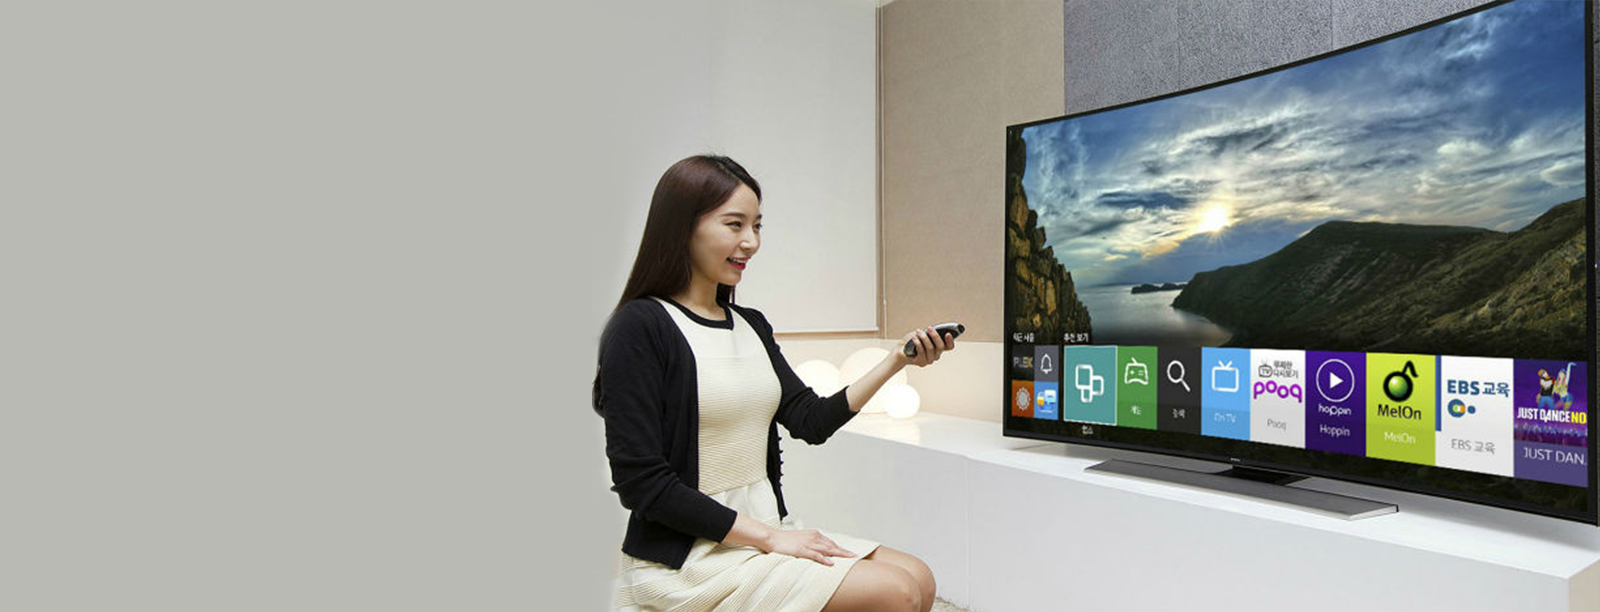 Samsung tv service center chennai